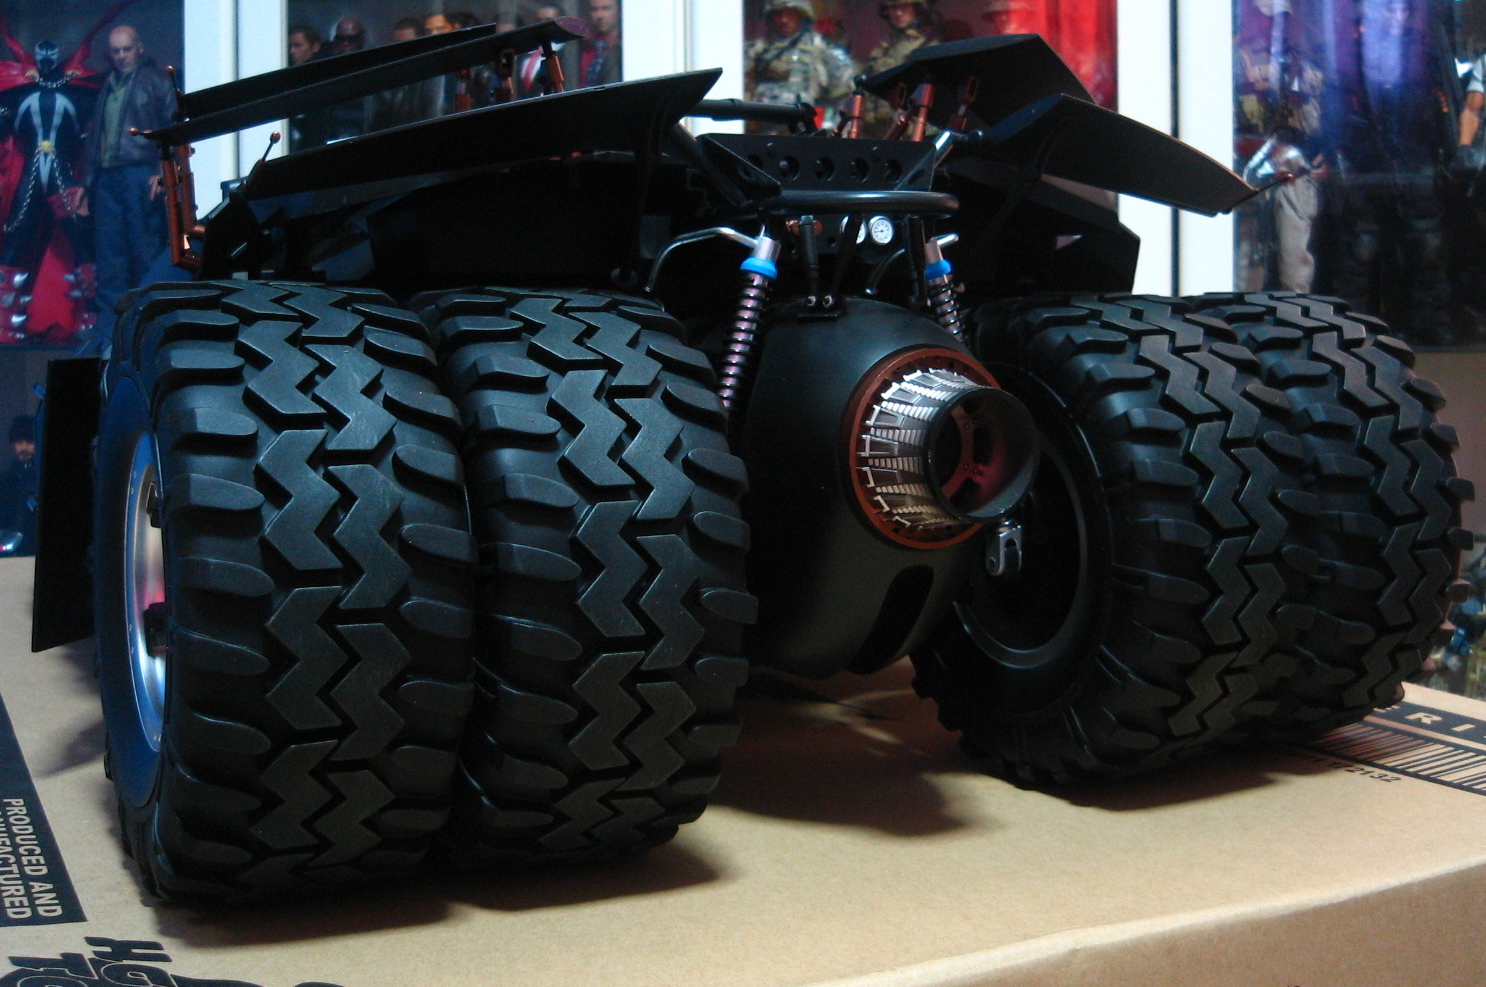 1:6 Hot Toys Batmobile | Flickr - Photo Sharing!